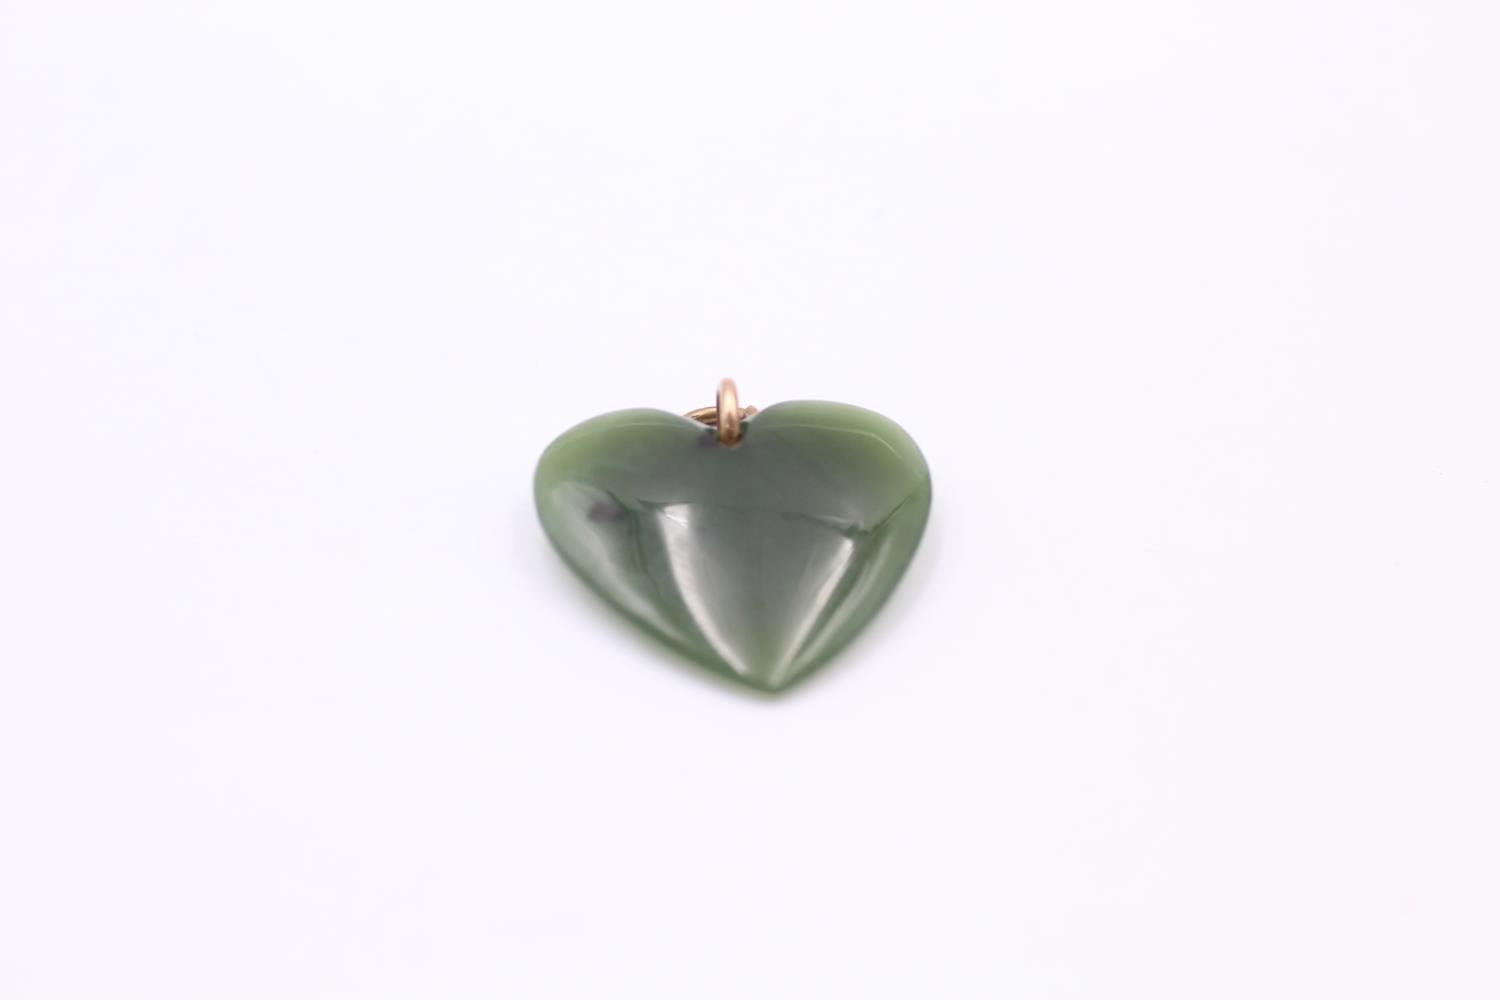 9ct gold antique nephrite heart pendant (4.5g)